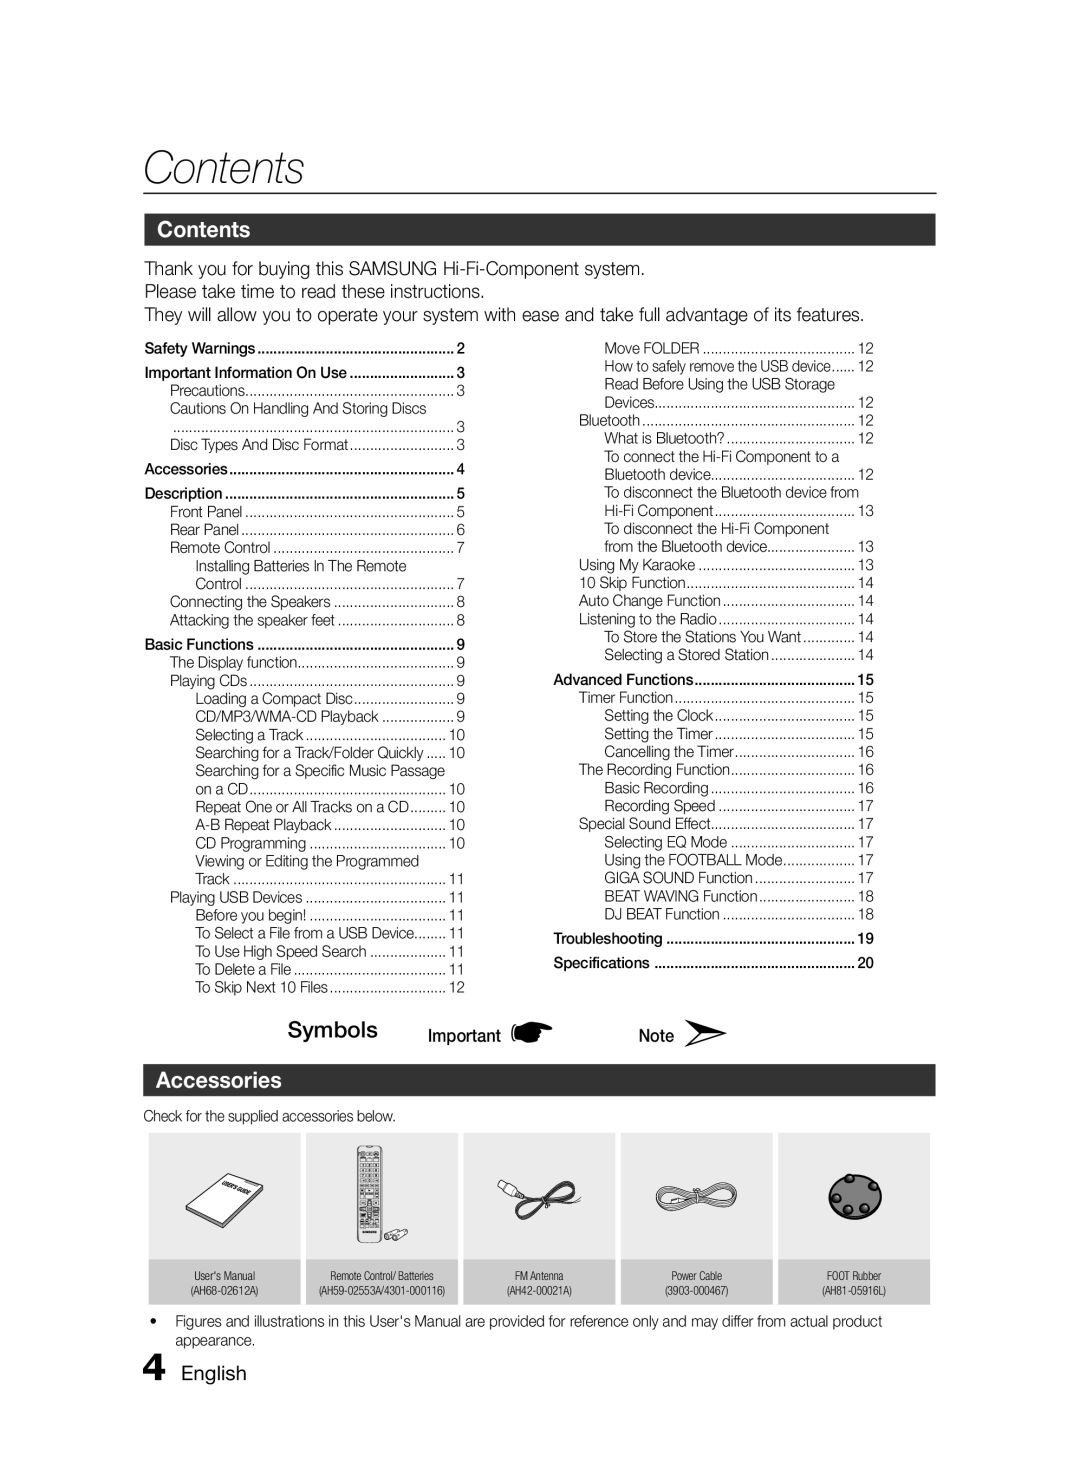 Samsung MXFS9000ZA user manual Contents, Symbols, Accessories, English 